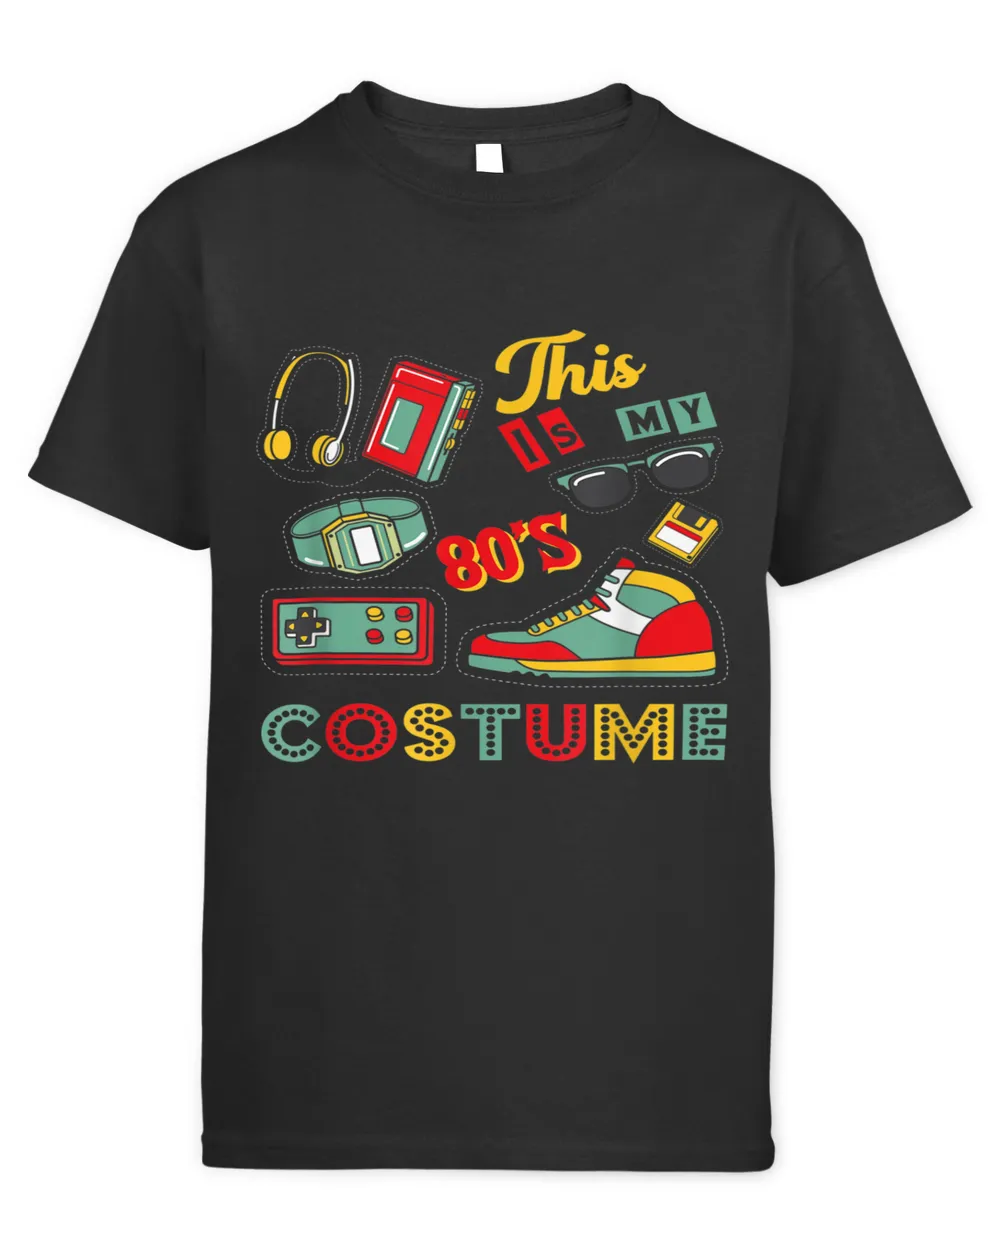 This Is My 80s Costume Shirt 1980s Halloween Retro Vintage